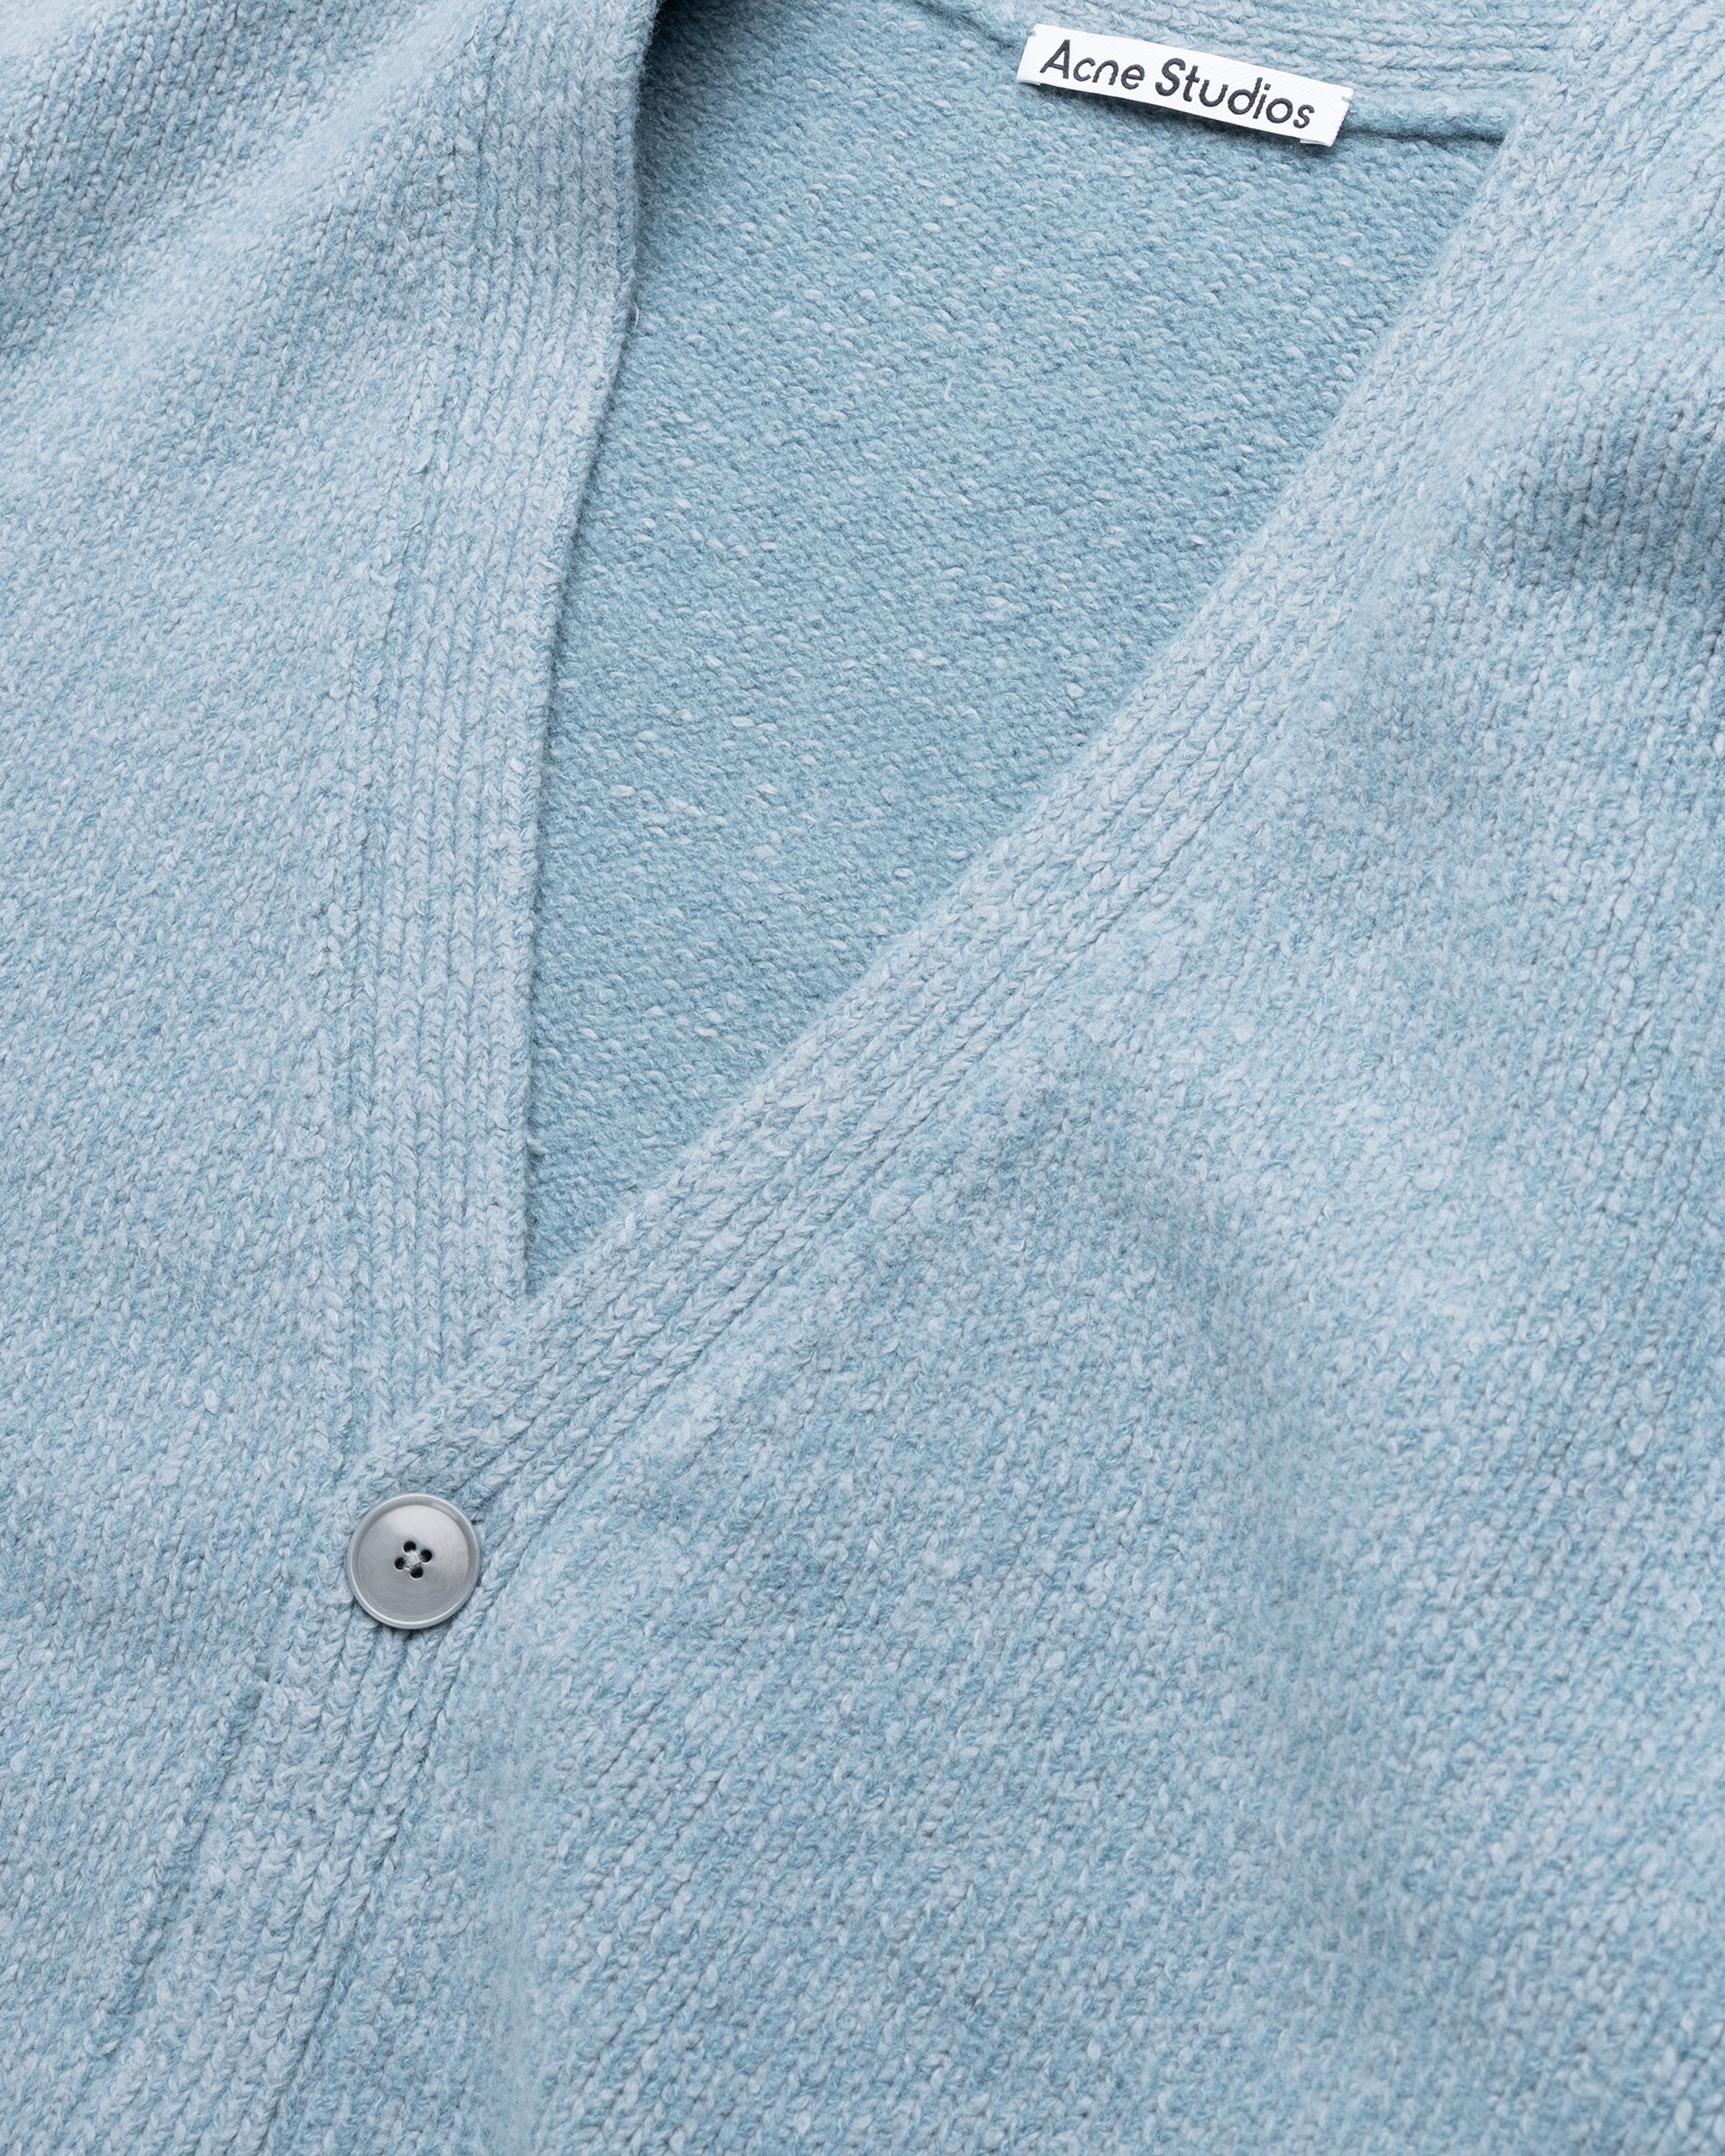 Acne Studios – Wool Blend Cardigan Mineral Blue - Cardigans - Blue - Image 6